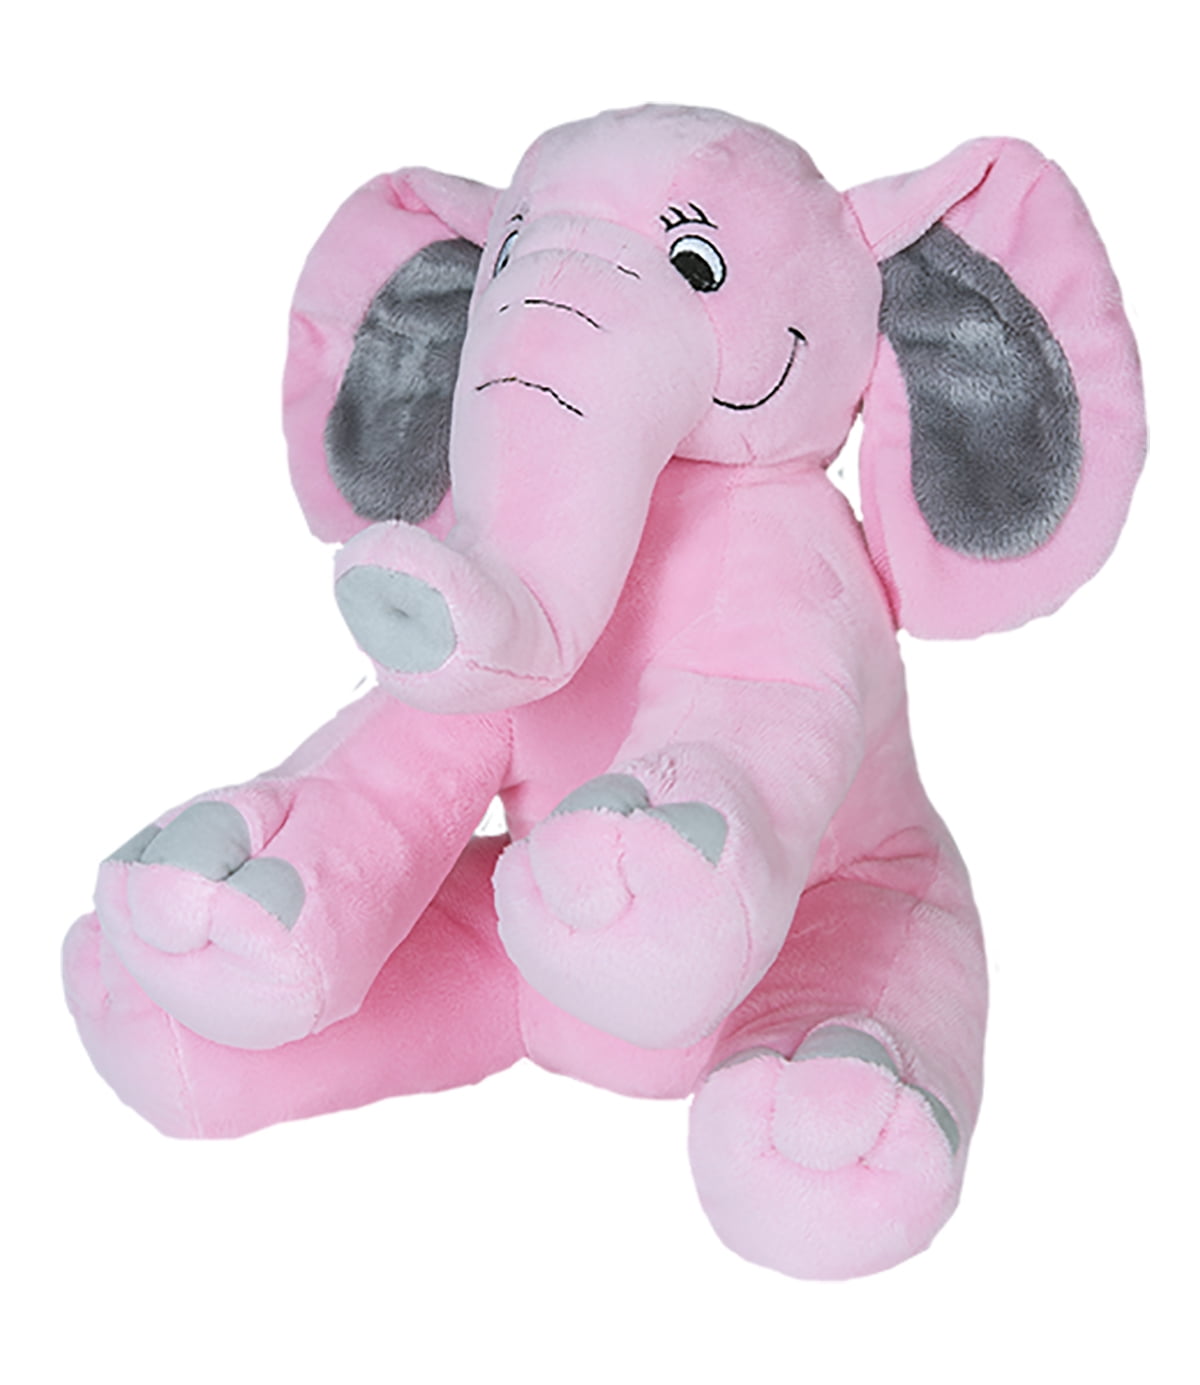 You Love 'e We Stuff 'em Cuddly Soft 16 inch Stuffed Elmer the Blue Elephant 